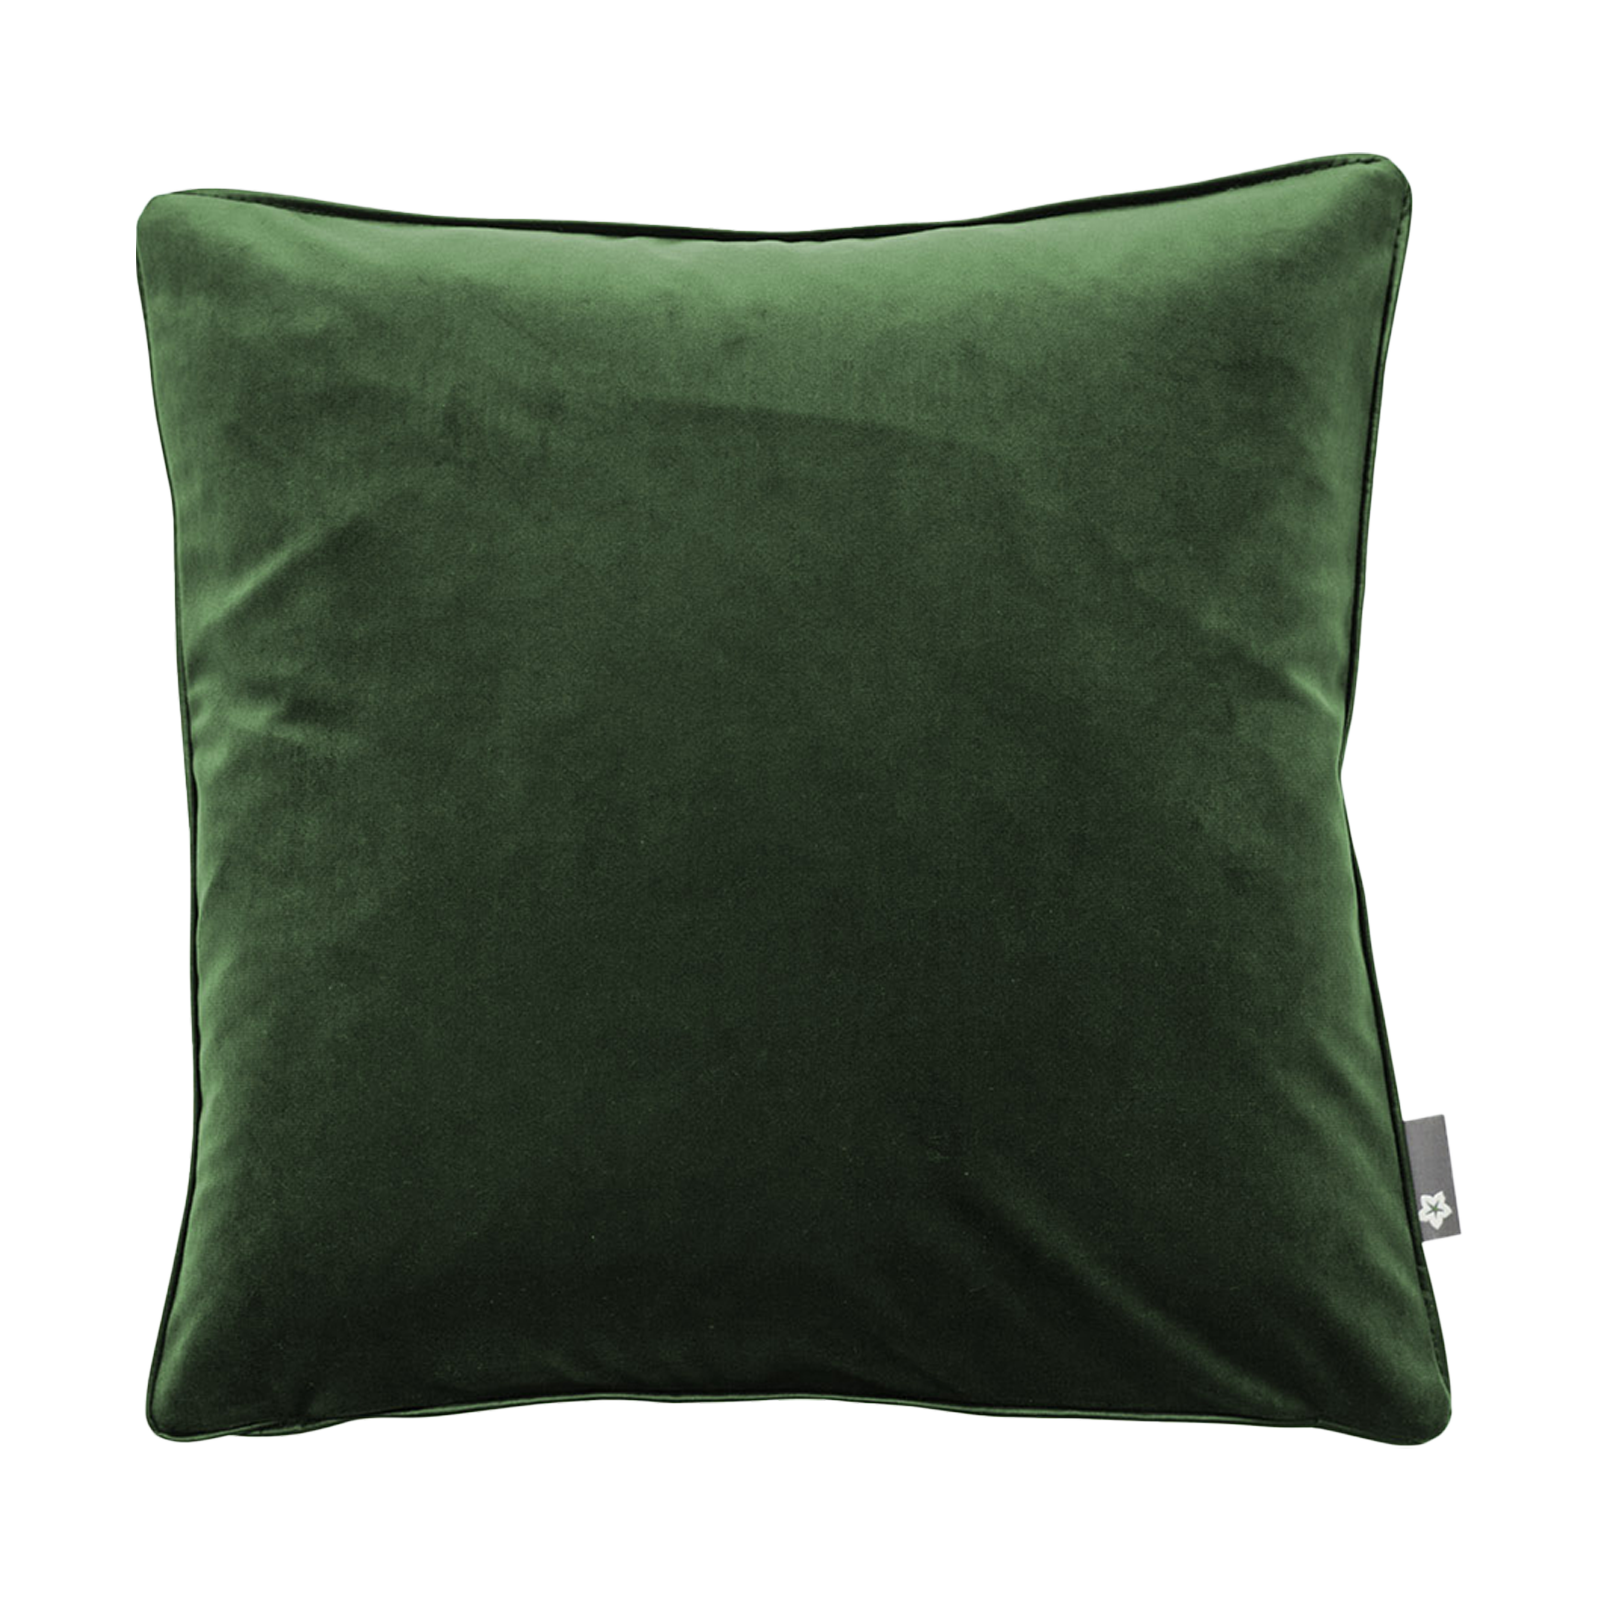 Größe: 41x 41 cm Farbe: grasgrün #farbe_grasgrün